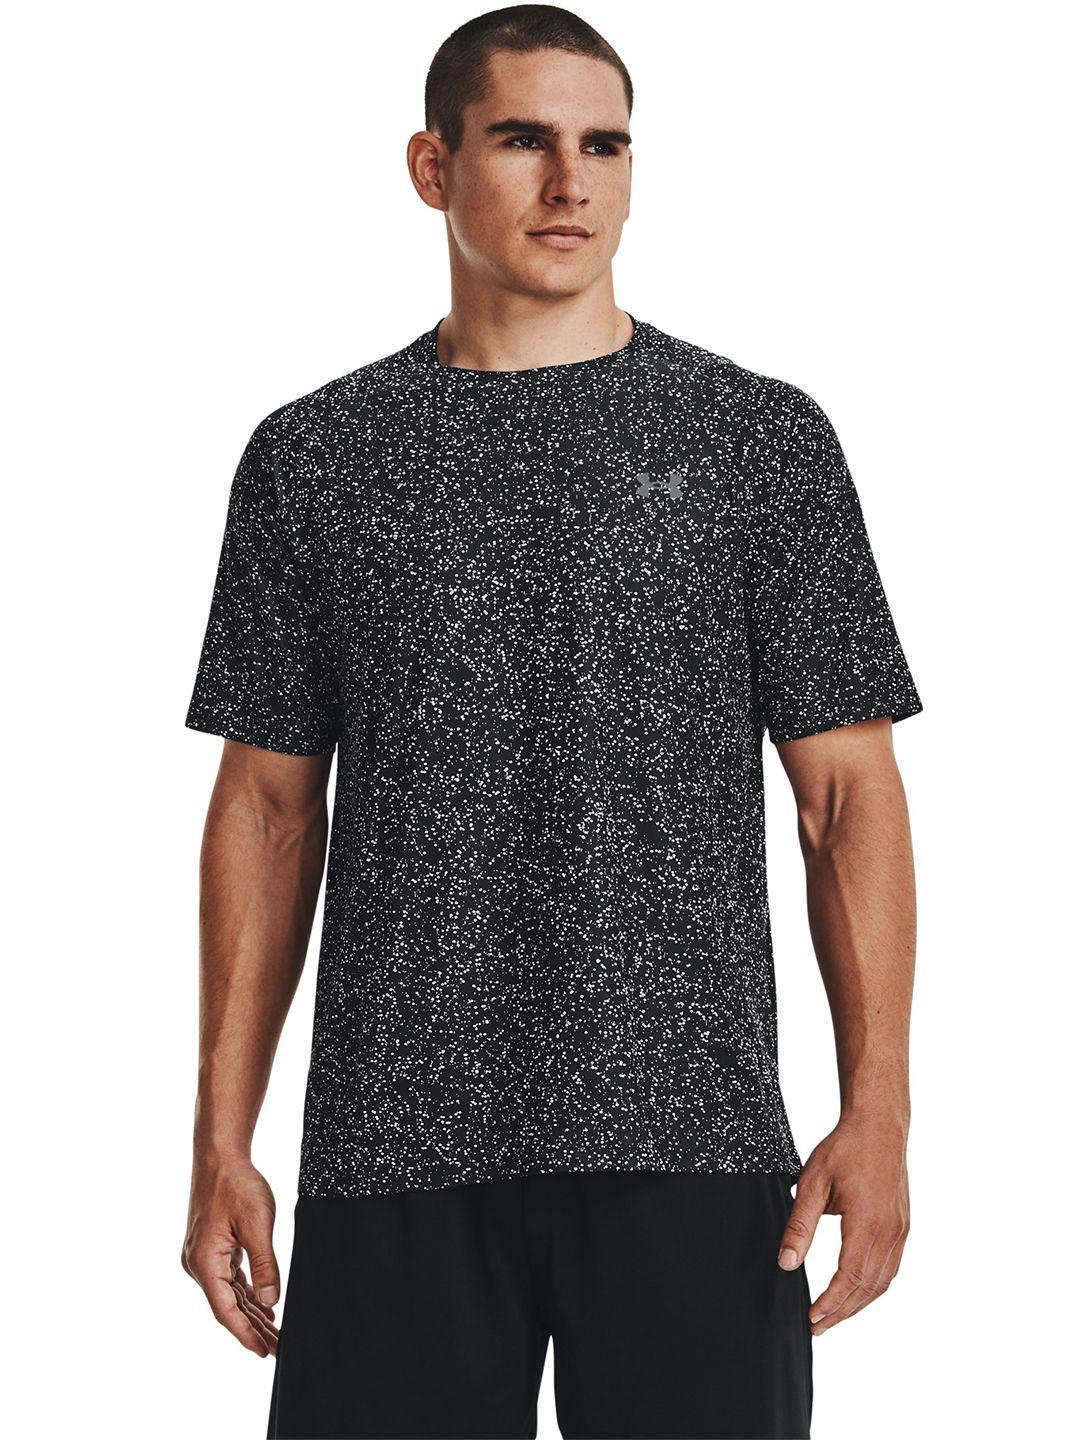 under-armour-men-black-&-white-printed-loose-t-shirt